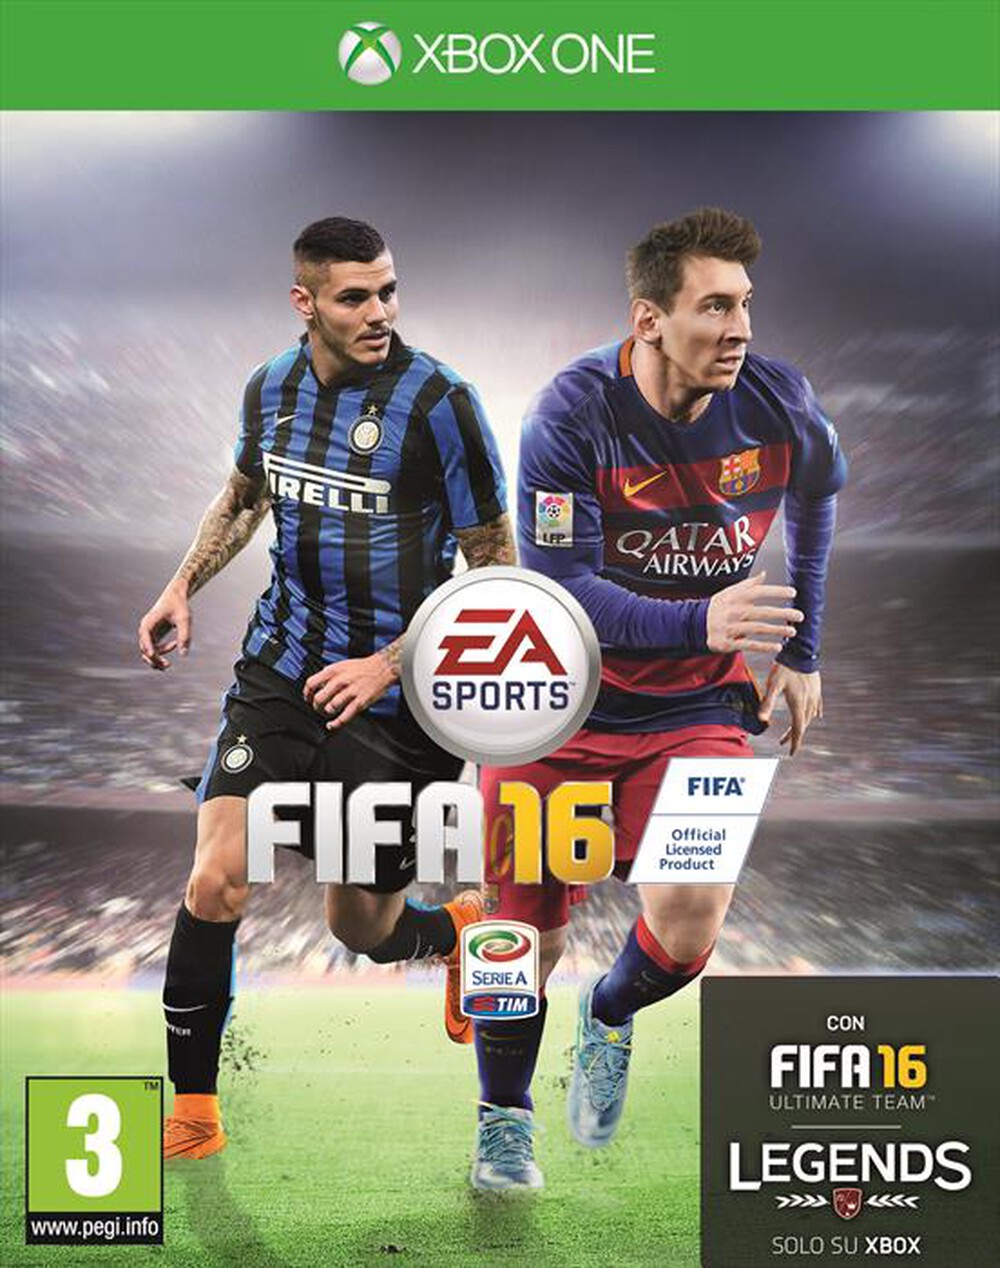 "ELECTRONIC ARTS - FIFA 16 Xbox One - "